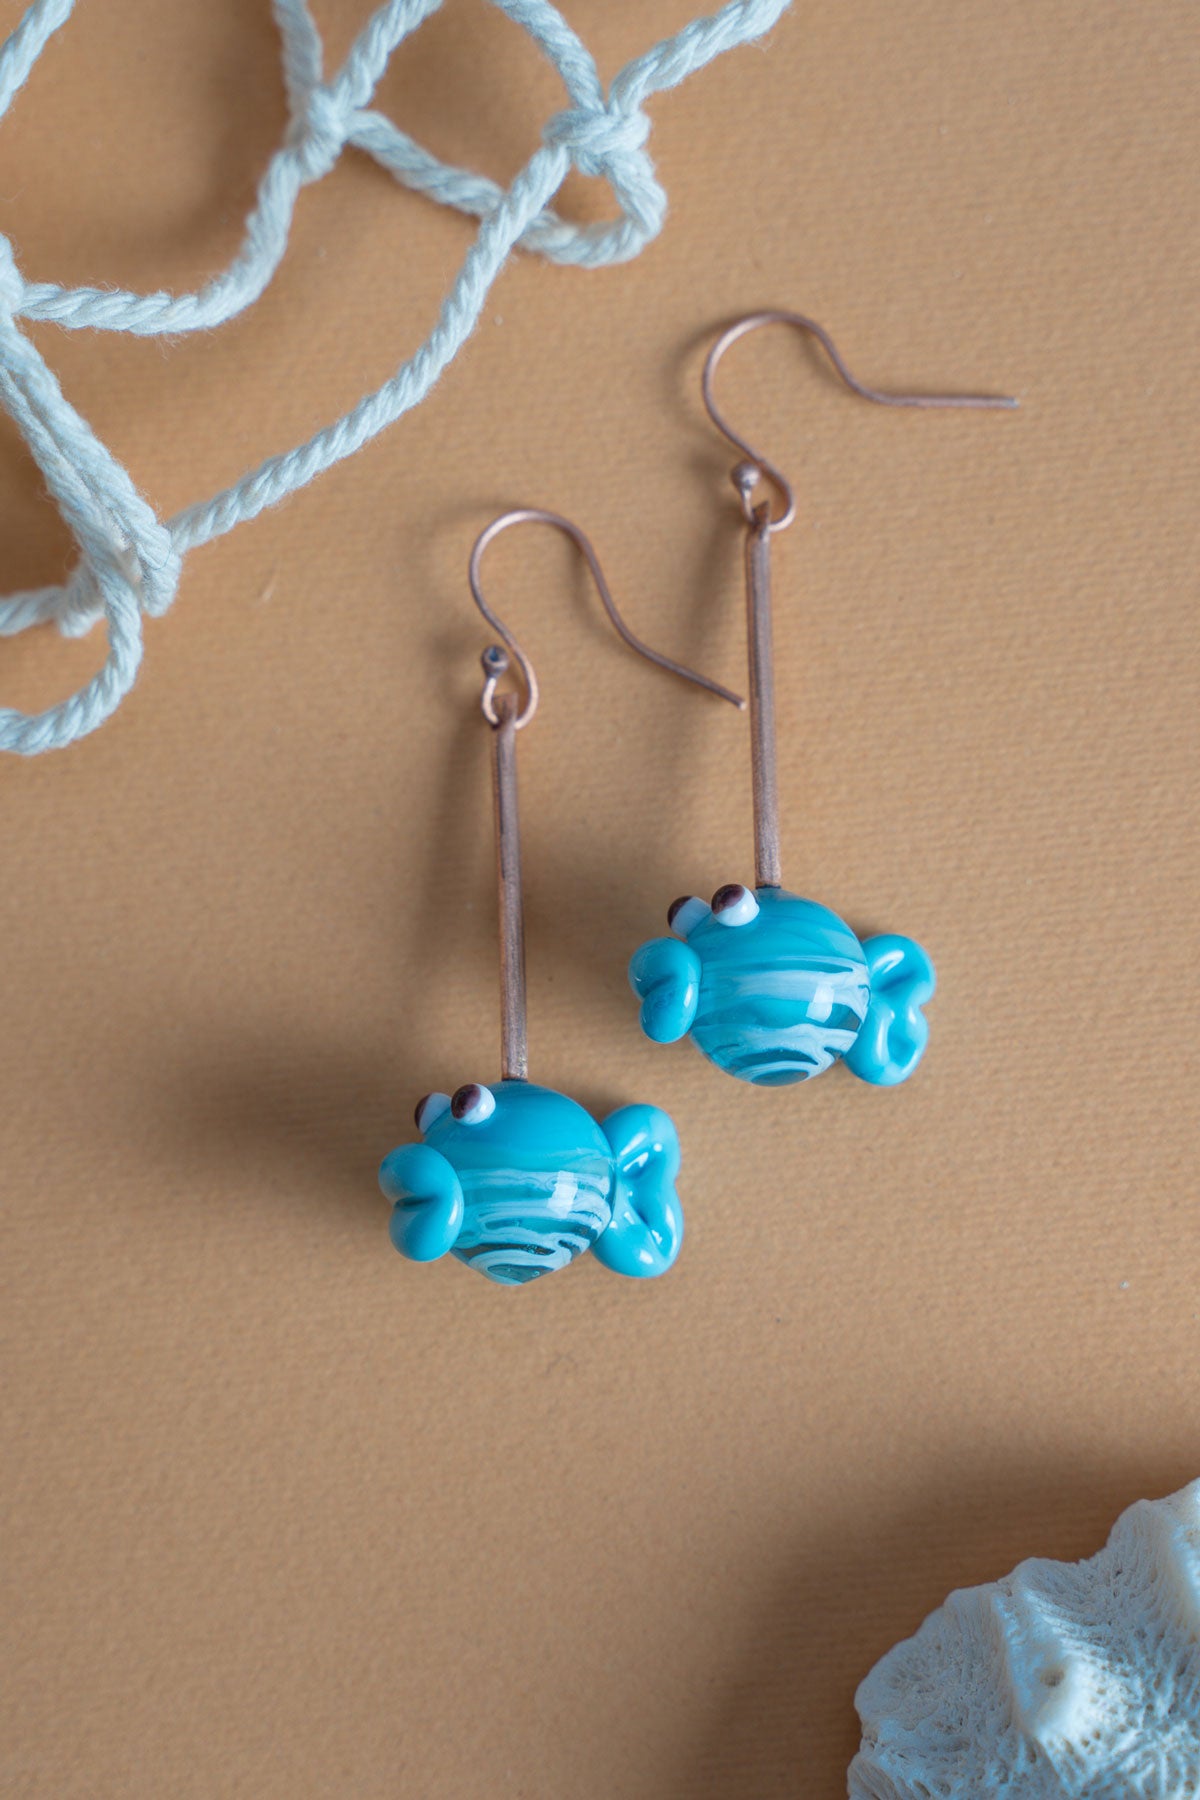 Carribean earrings